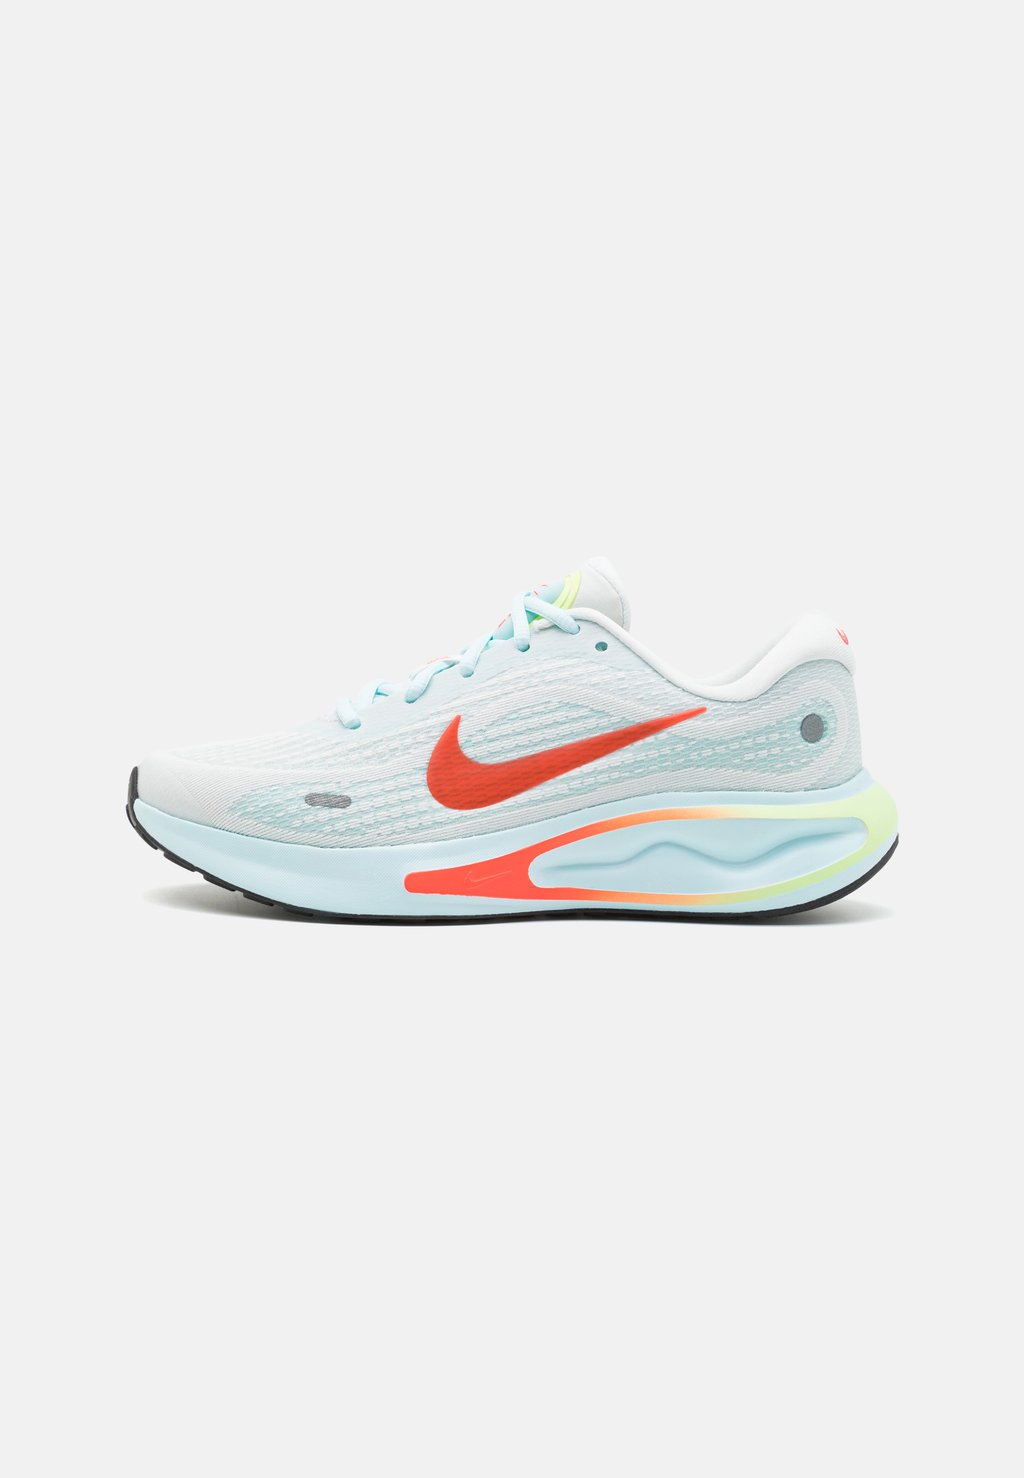 Нейтральные кроссовки JOURNEY RUN Nike, цвет summit white/bright crimson/glacier blue/barely volt/black